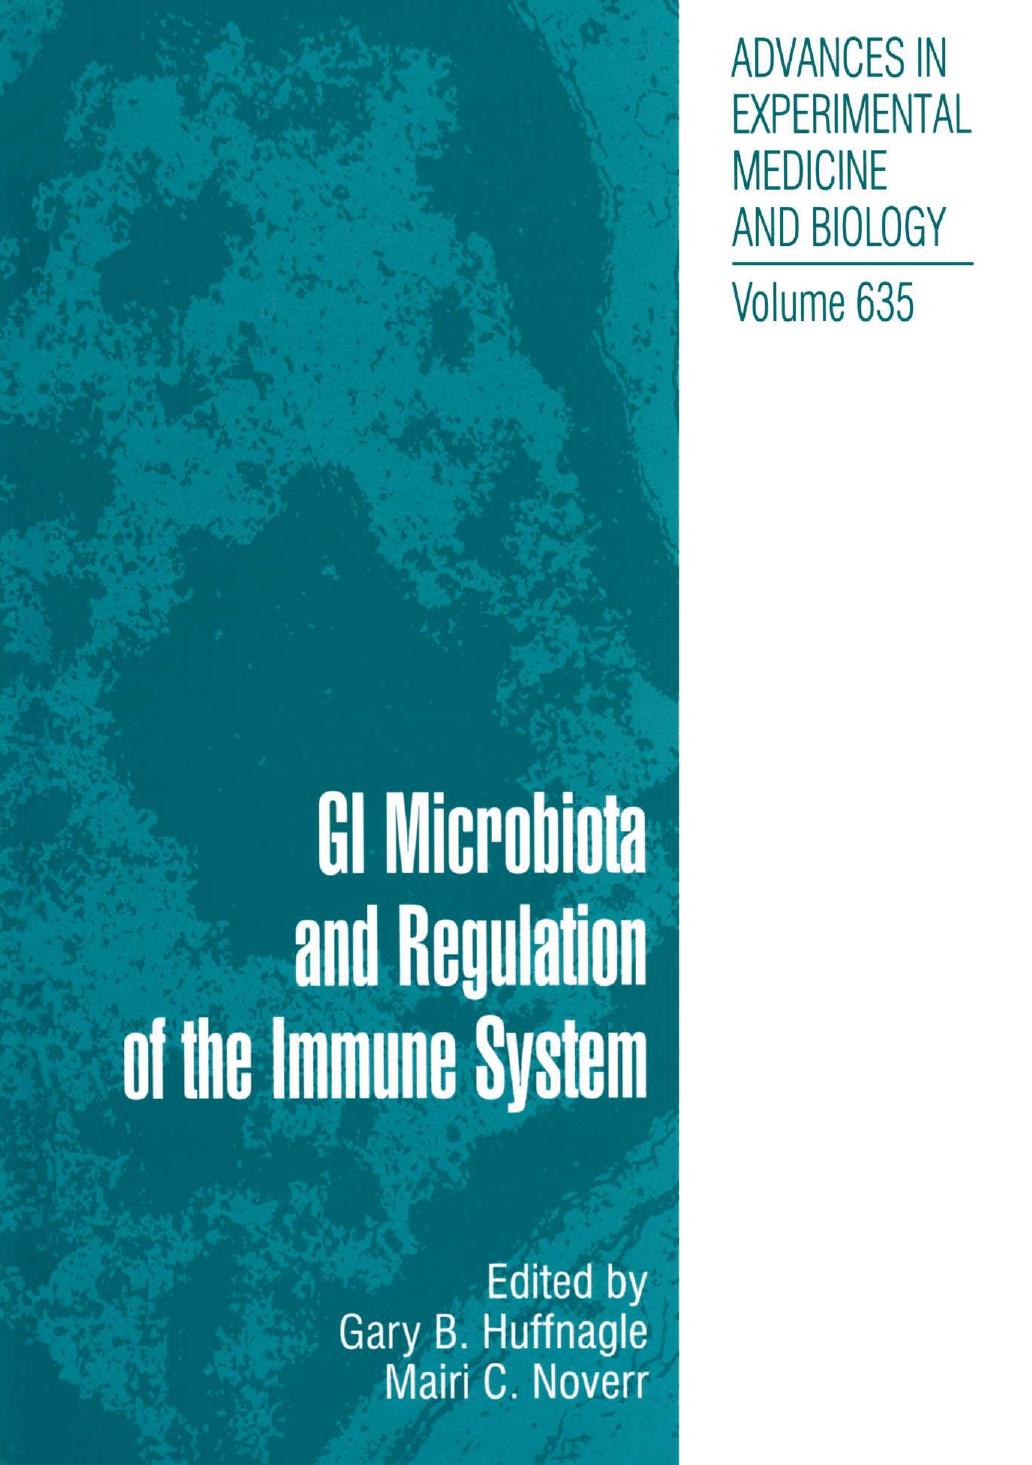 GI Microbiota and Regulation of the Immune System 2008.pdf